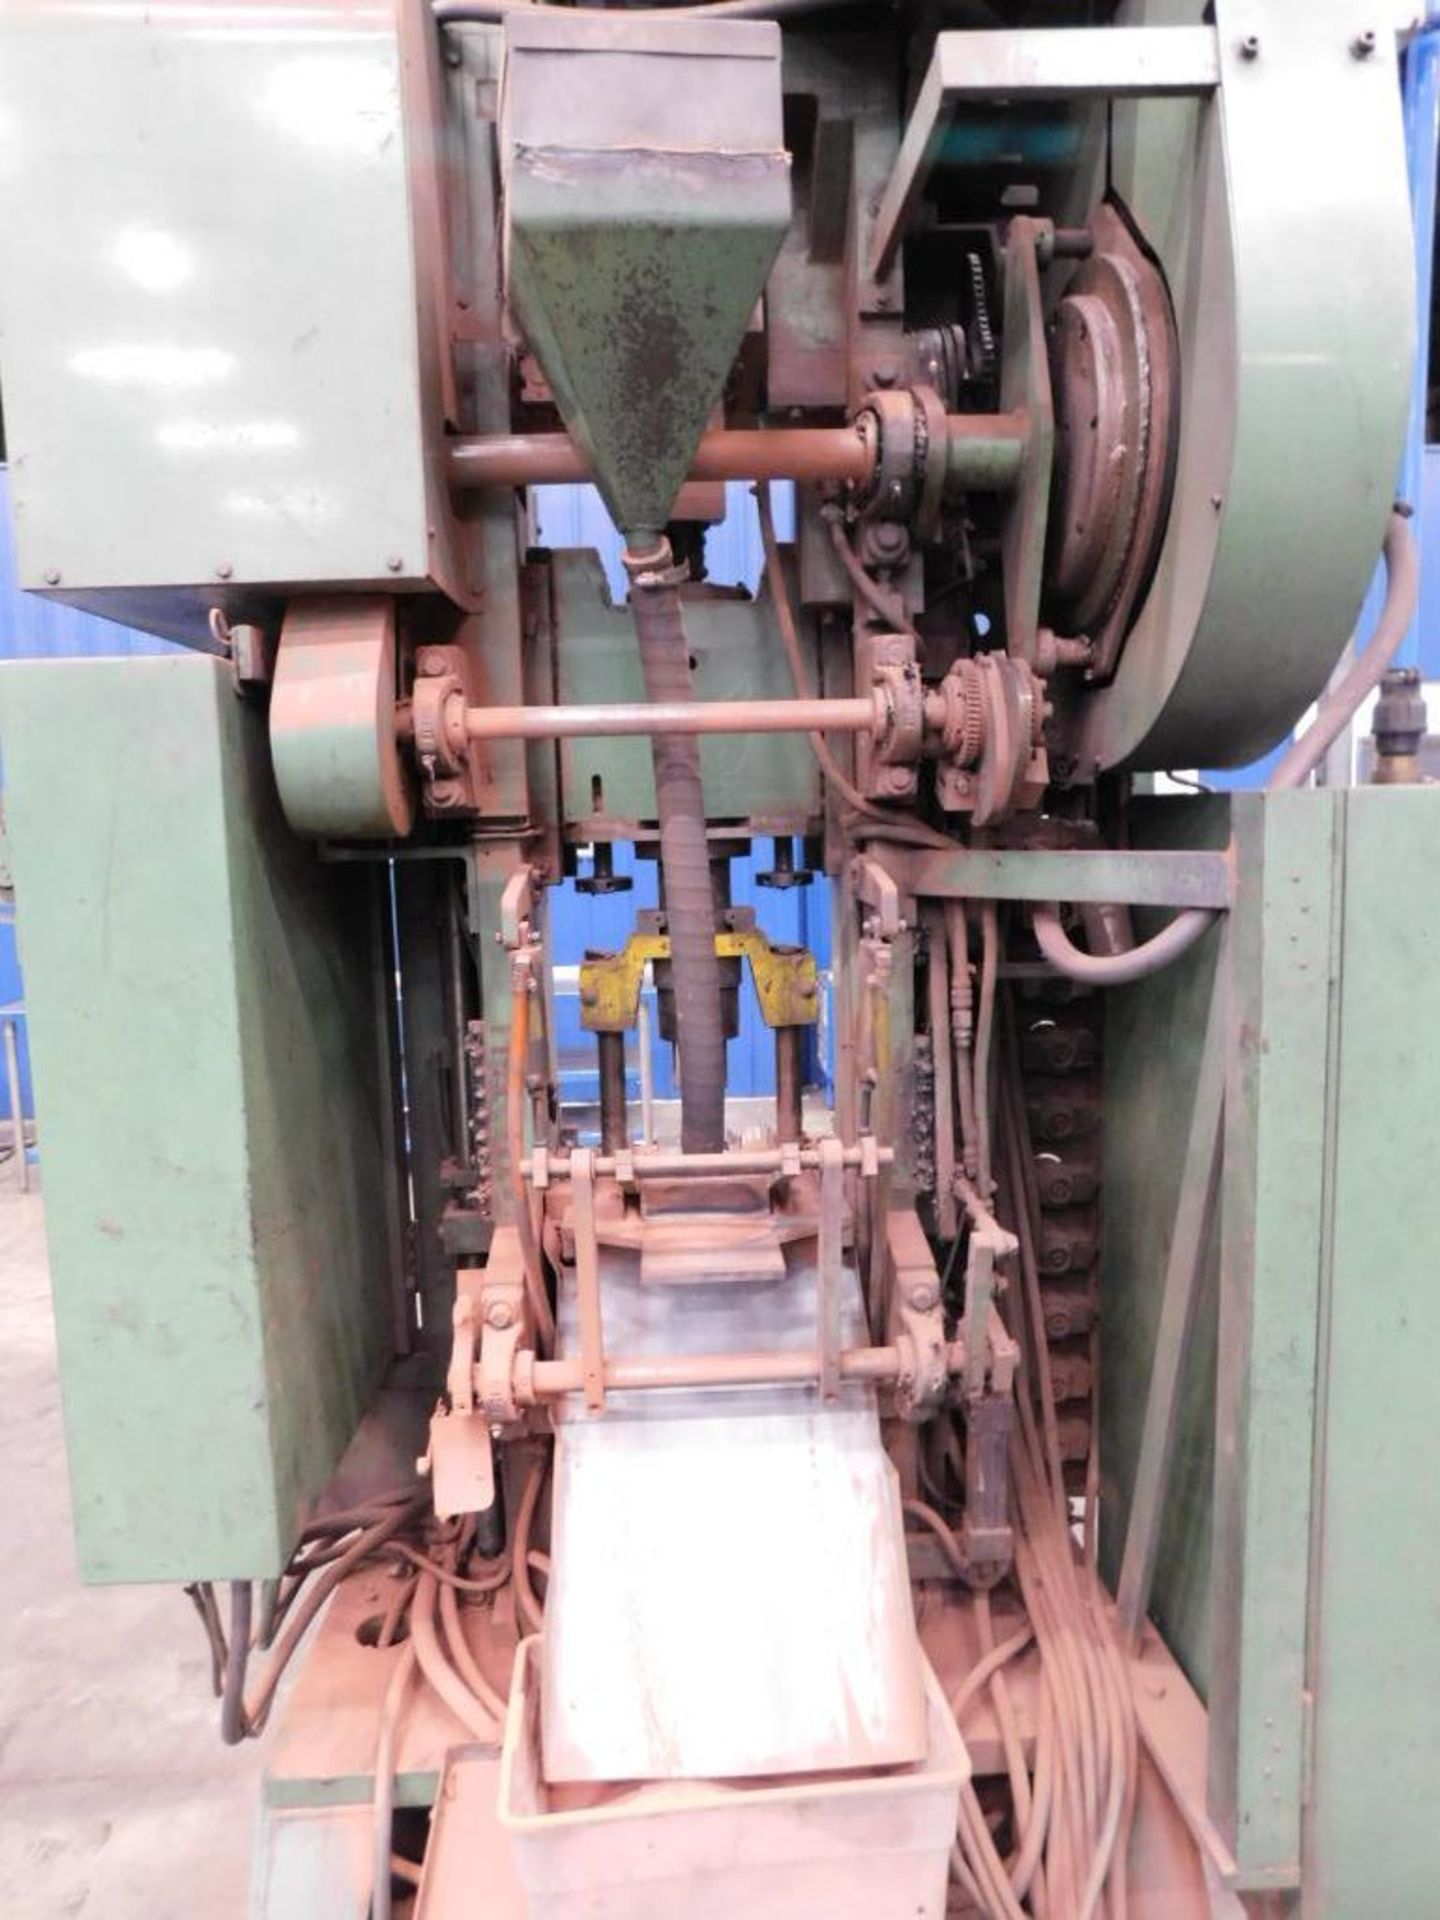 Gasbarre Powder Compacting Press, Mechanical, Model 30 Standard, S/N: 86256, 30 Ton Maximum Pressing - Image 13 of 22